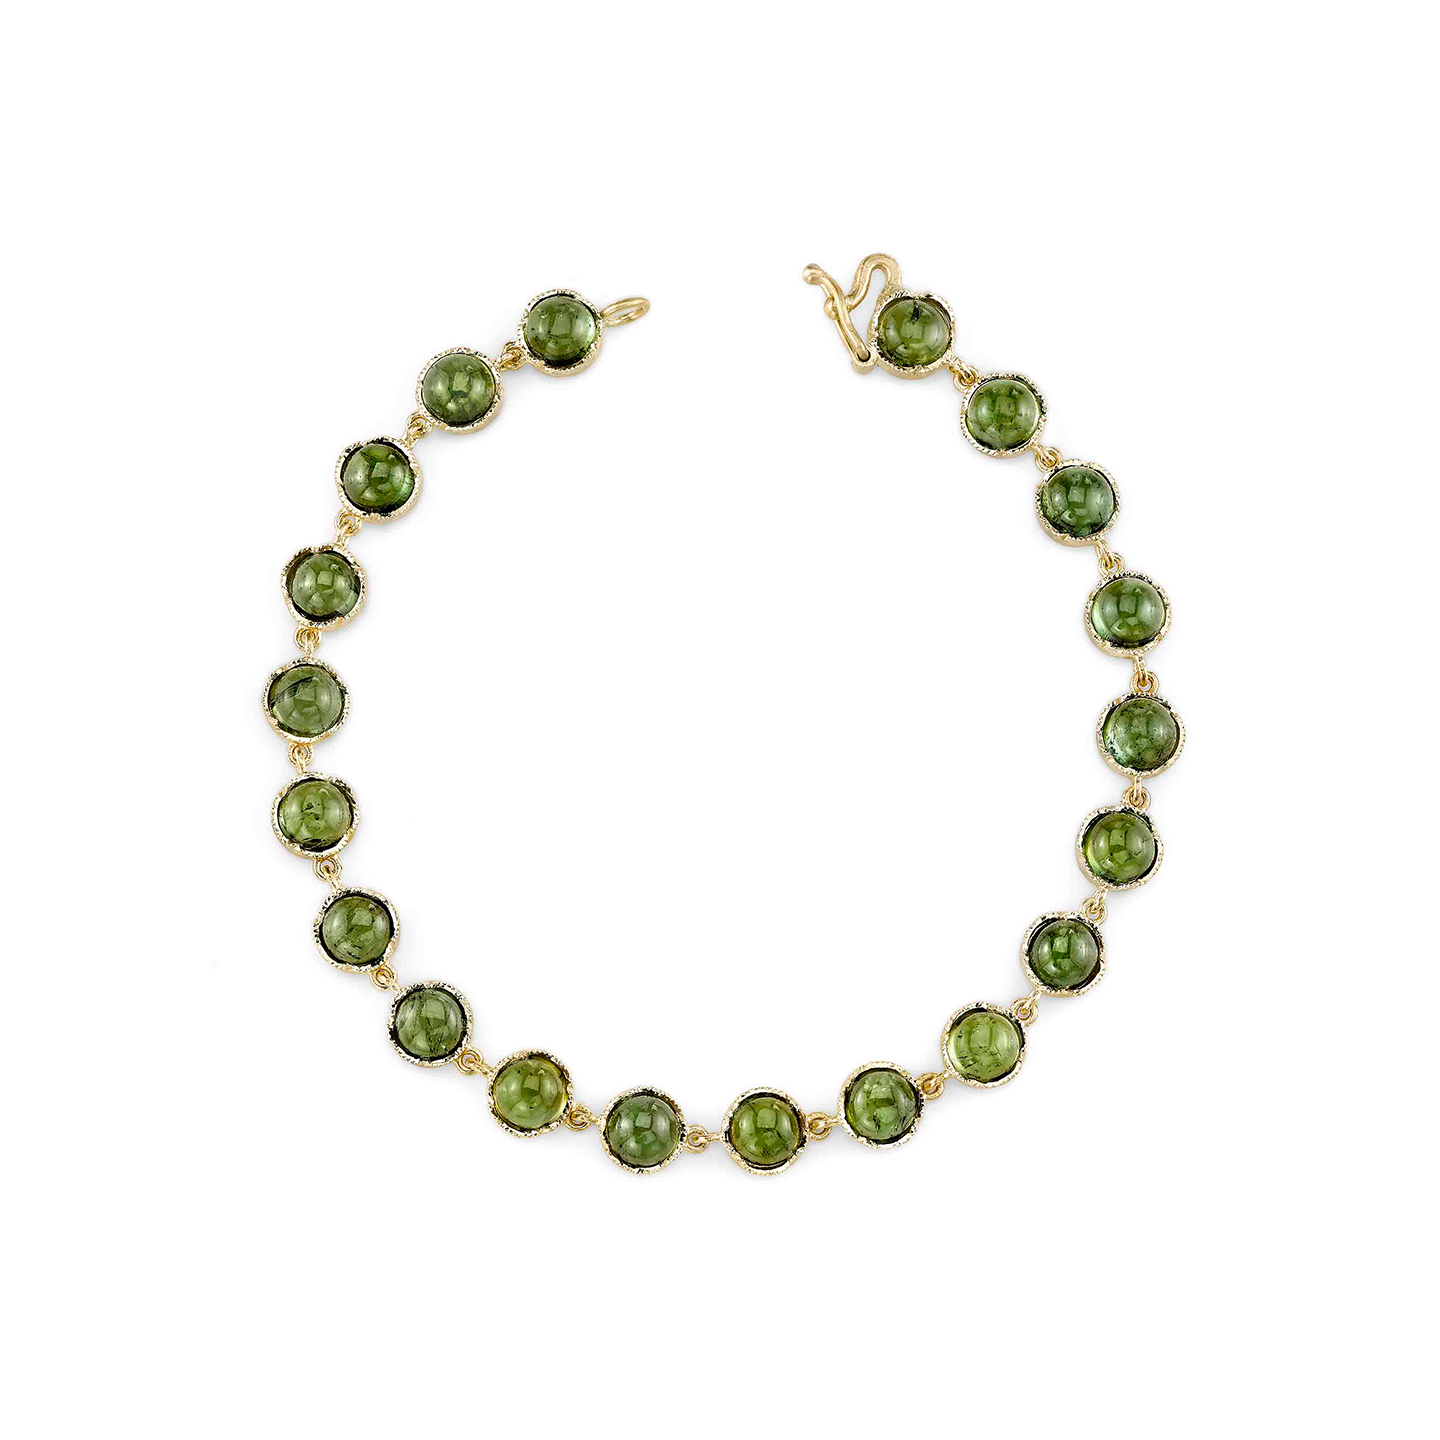 Irene Neuwirth 'Classic' Green Tourmaline Bracelet